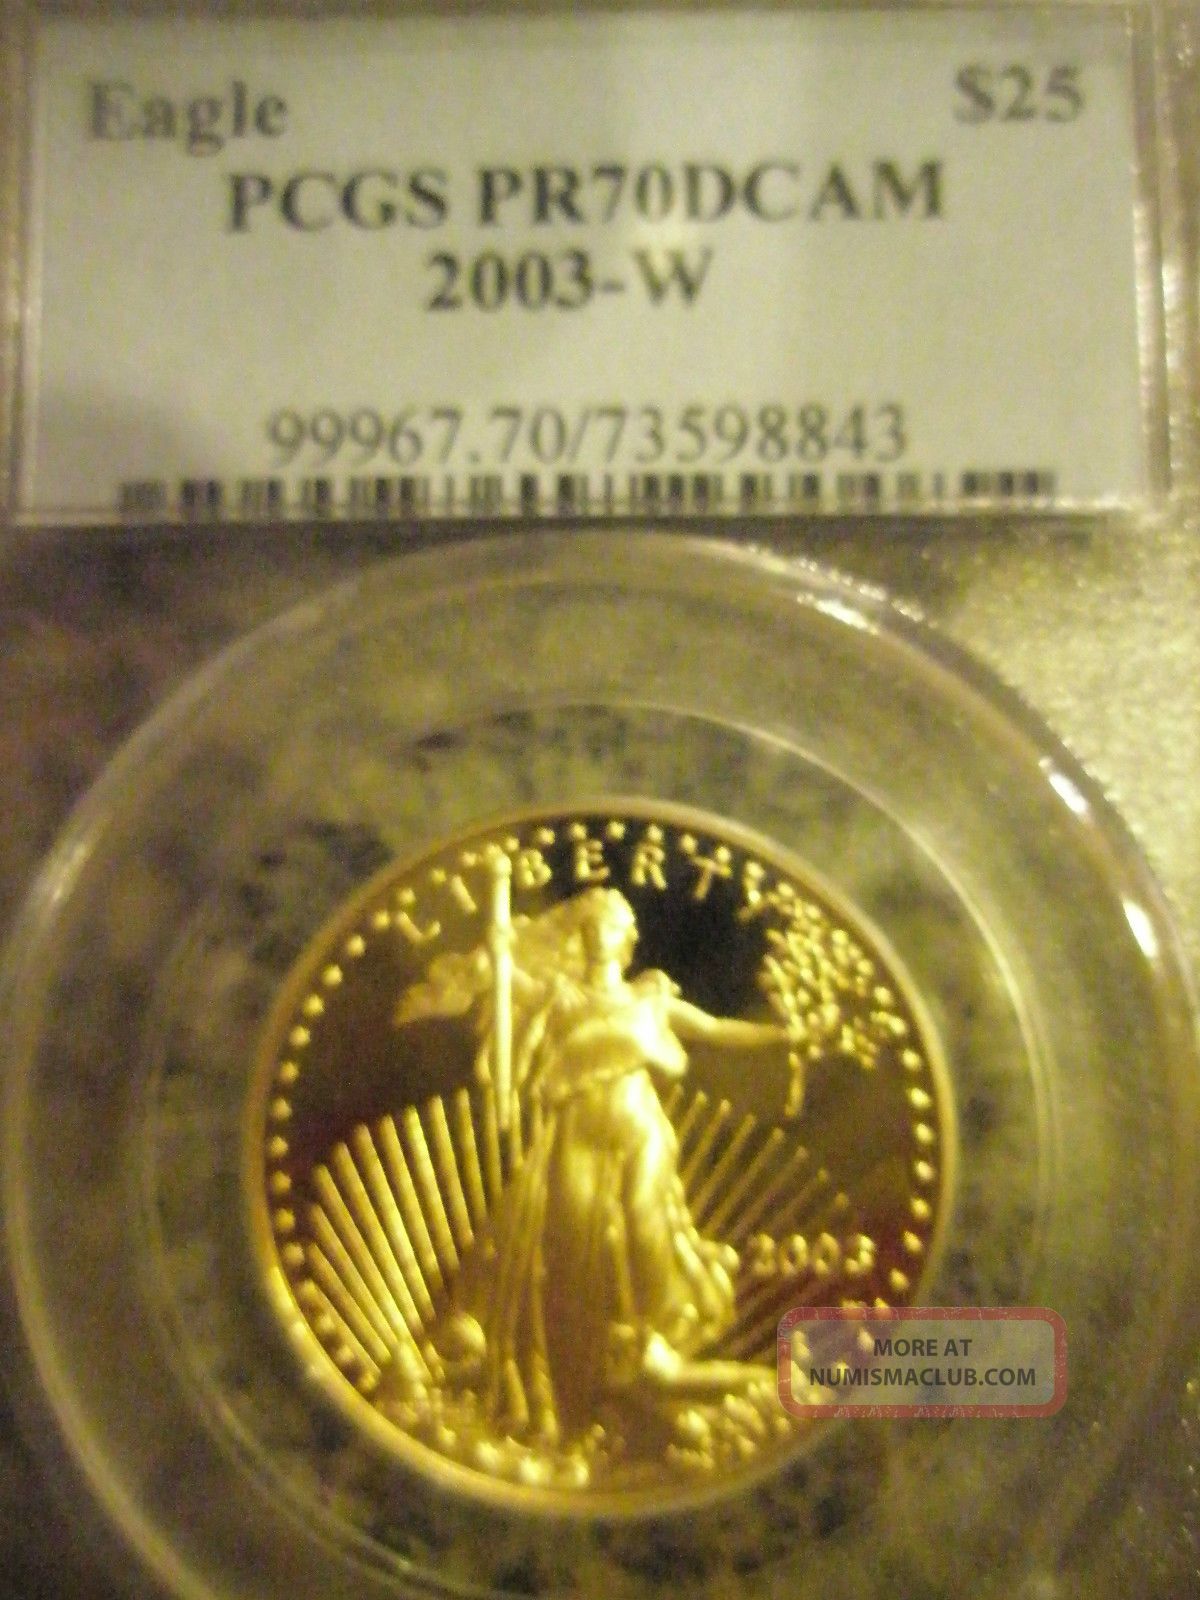 2003 - W Pcgs $25 Pr70dcam 1/2 Oz. 0. 999 Fine Gold American Eagle